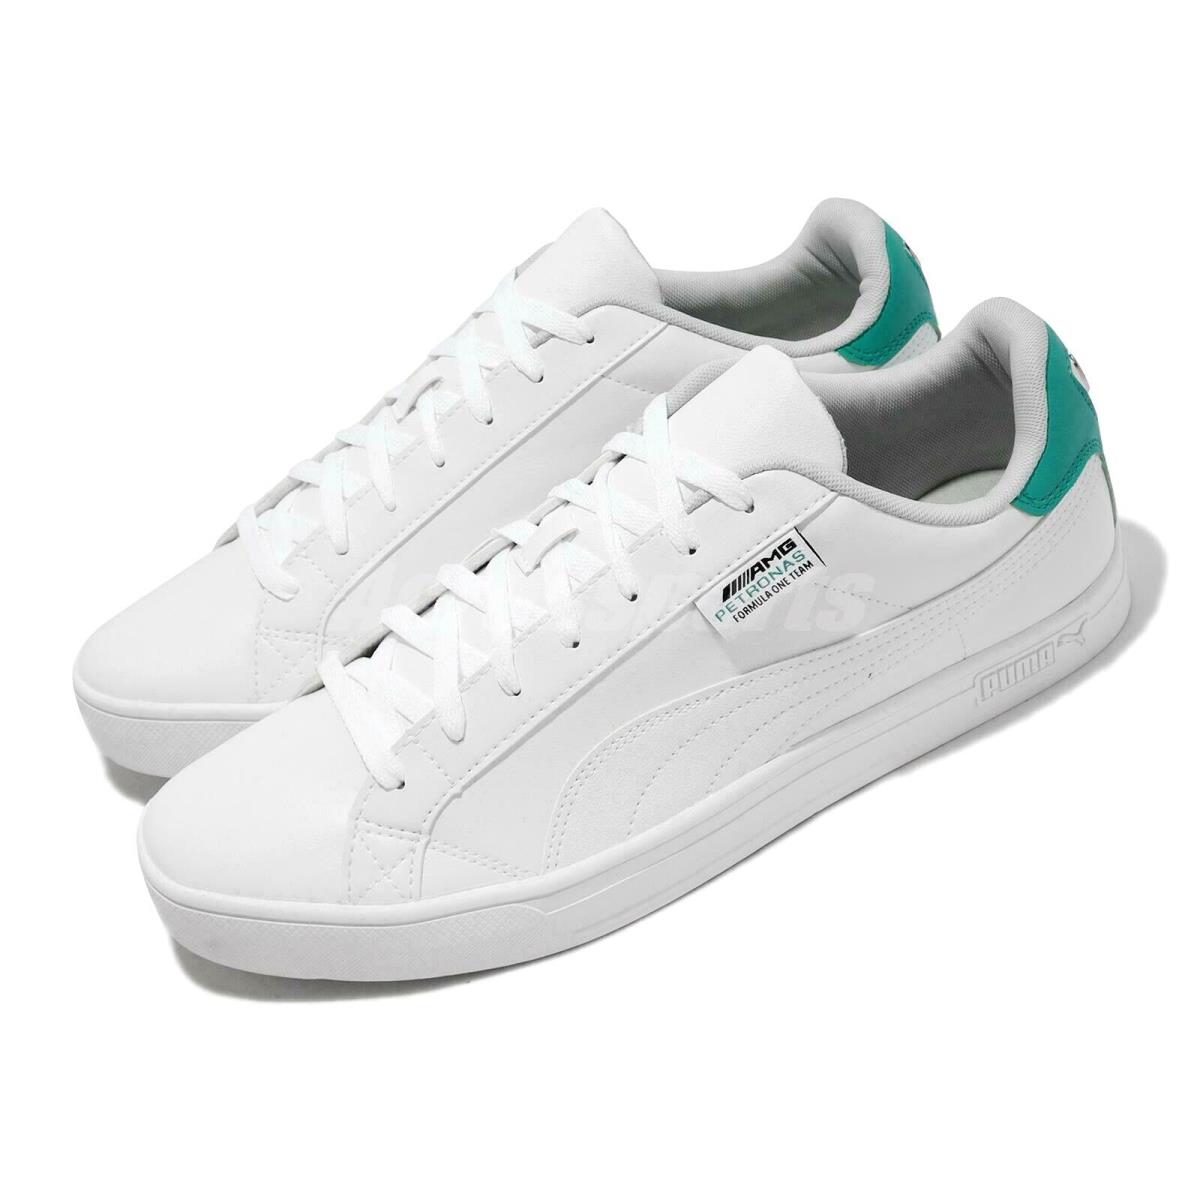 Mens Puma Mercedes Amg Smash Vulc V3 LO M White Driving Racing Sneaker Shoes - White